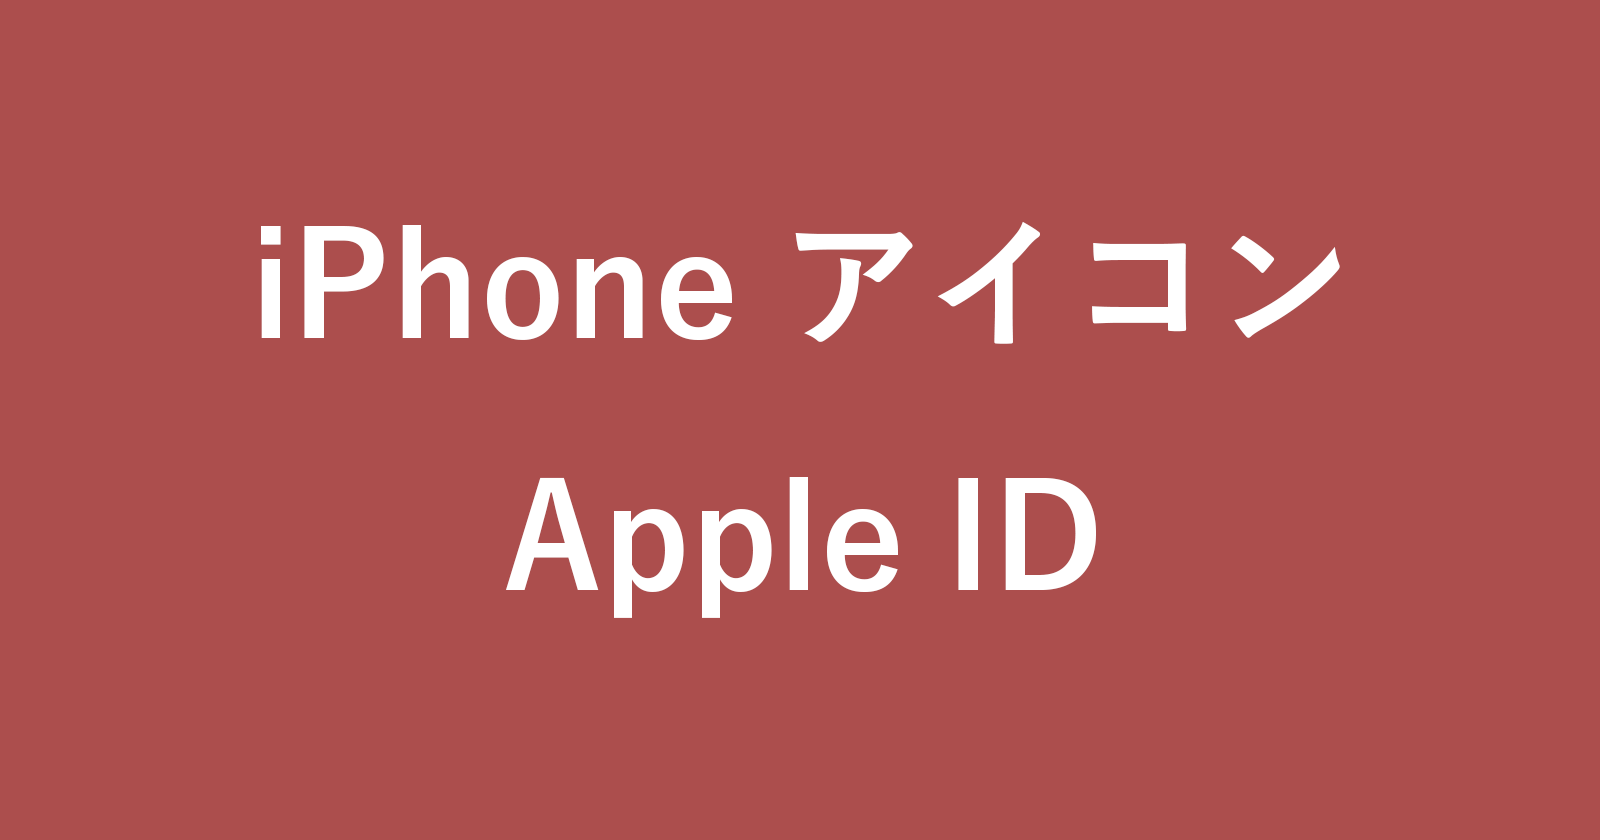 iphone apple id icon